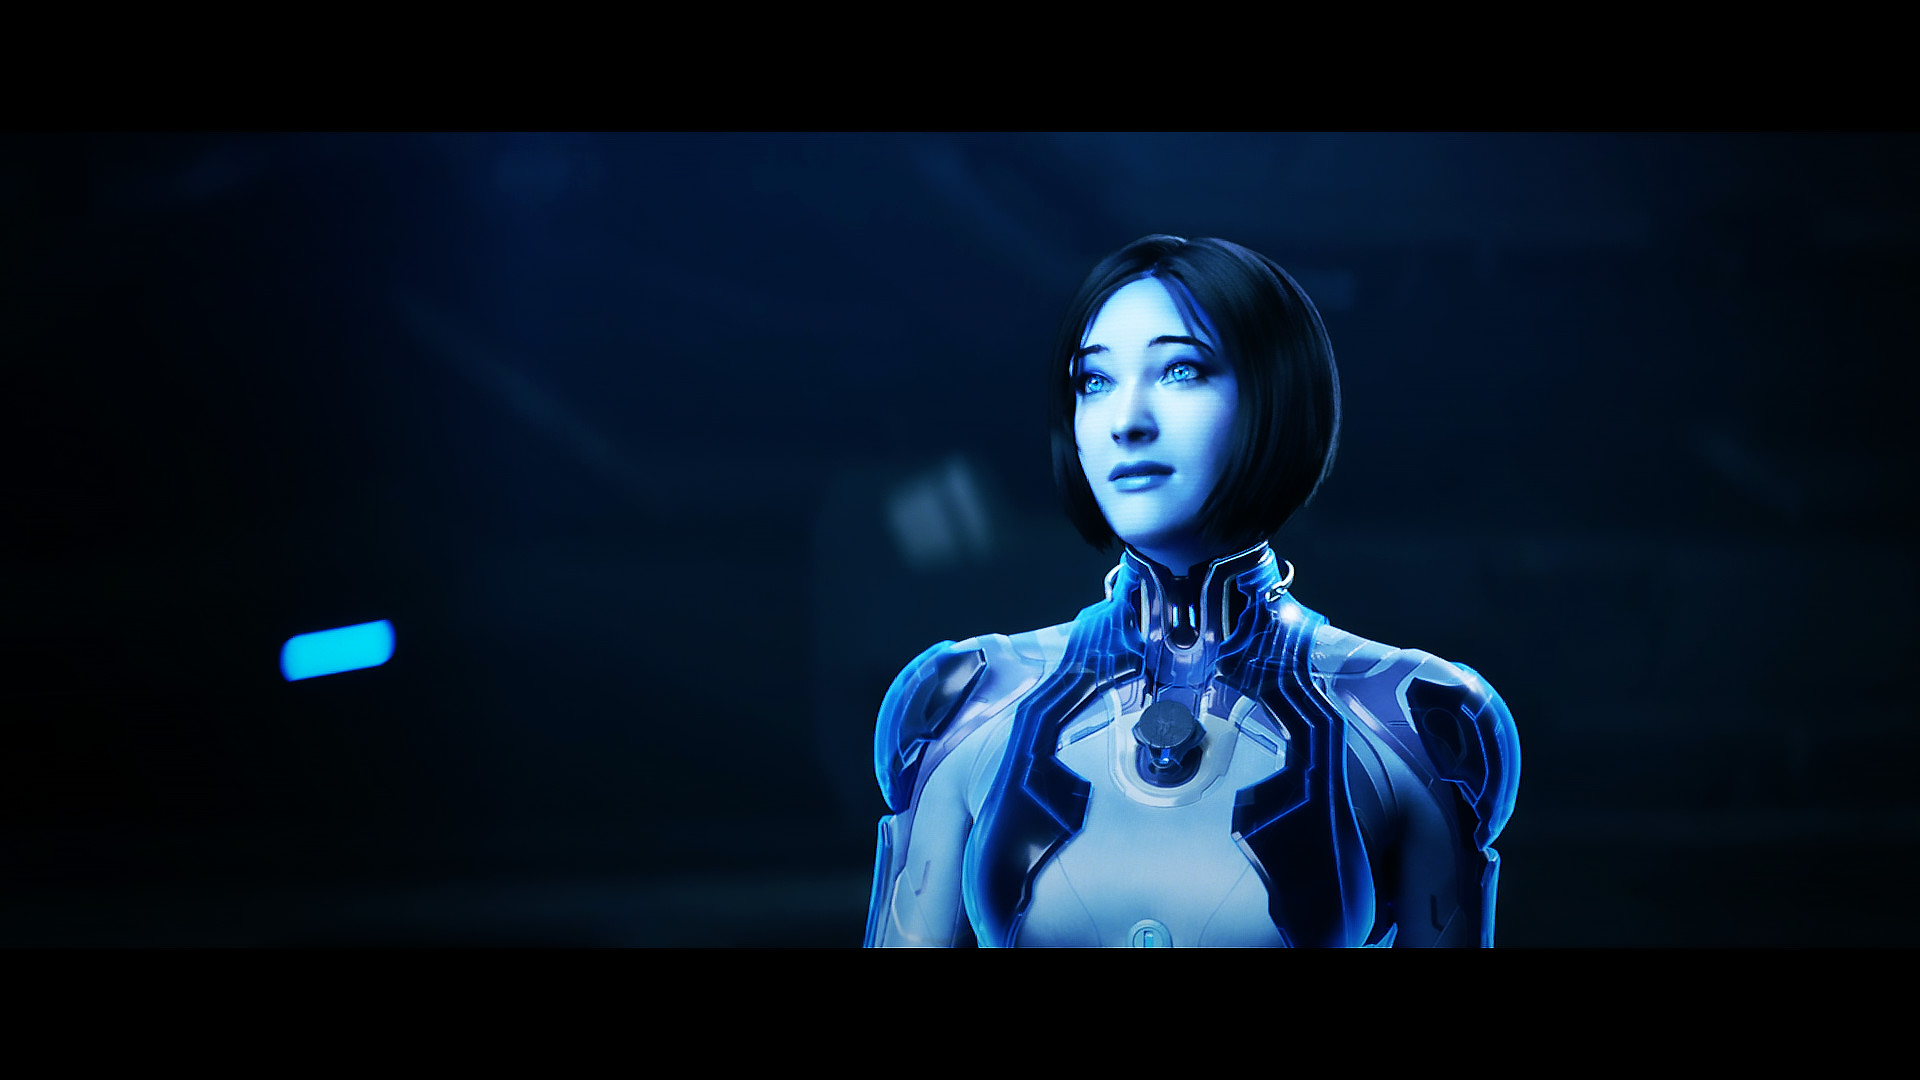 Halo Cortana Wallpaper Image